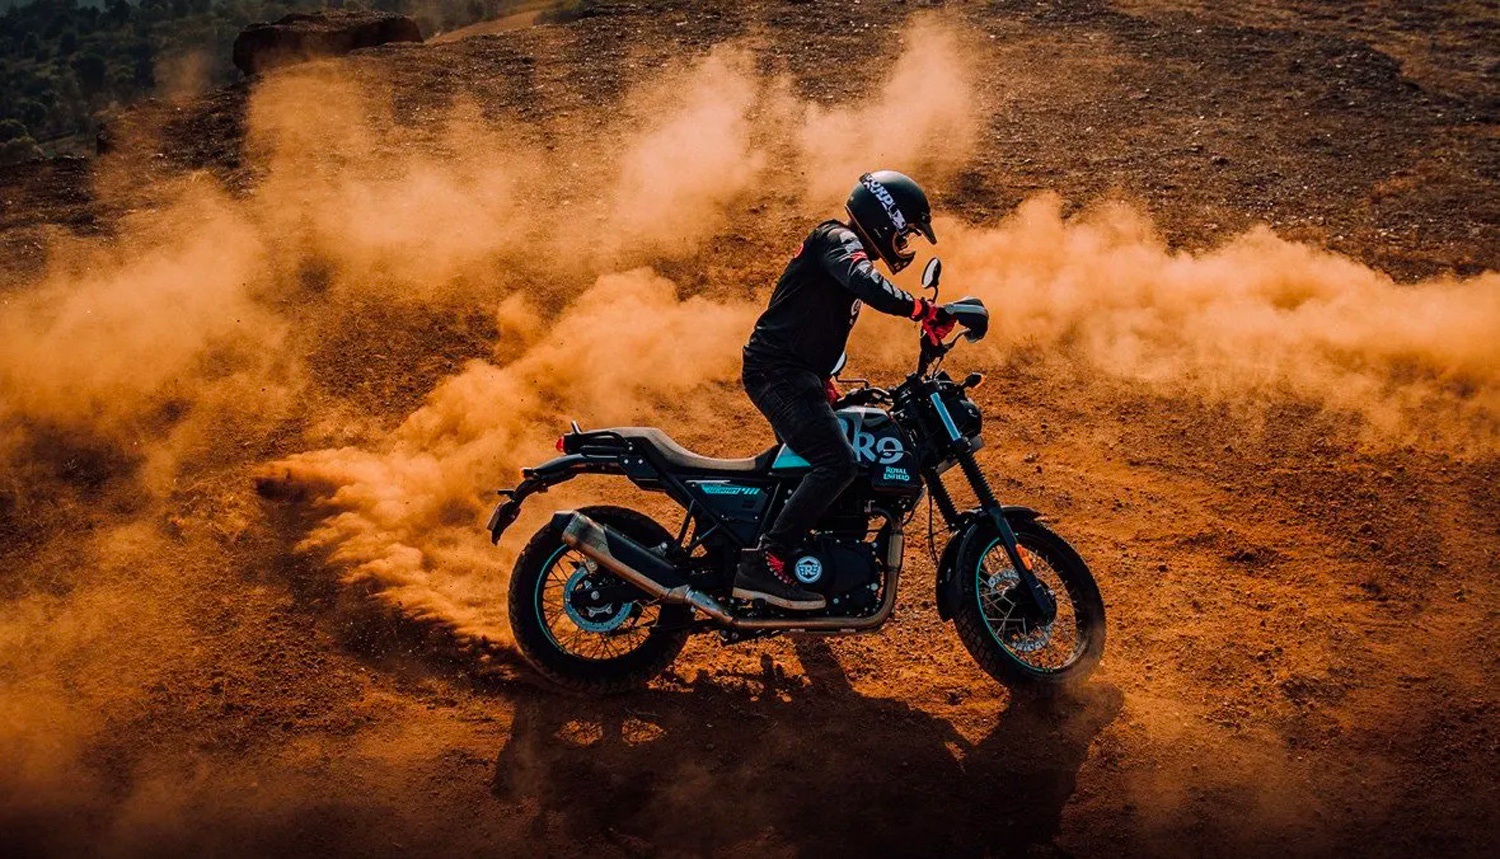 A 2022 Royal Enfield Scram 411 motorcycle kicks up some desert dirt at dusk